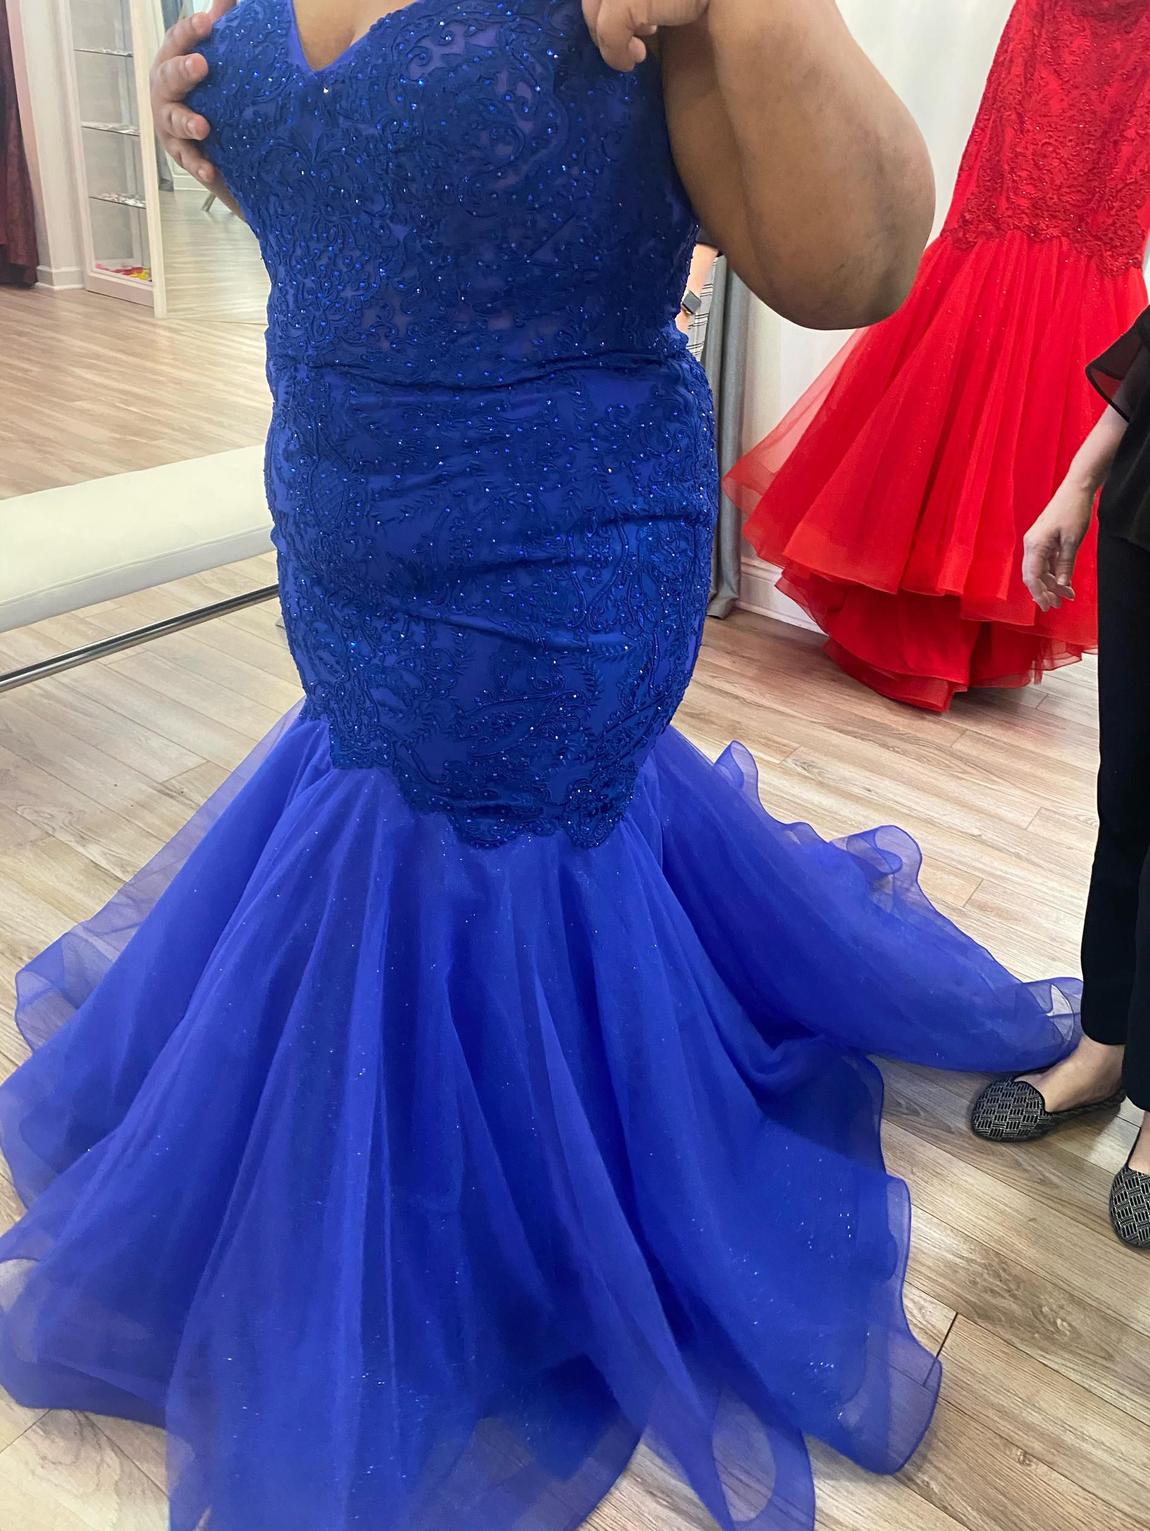 MoriLee Plus Size 22 Royal Blue Mermaid Dress on Queenly